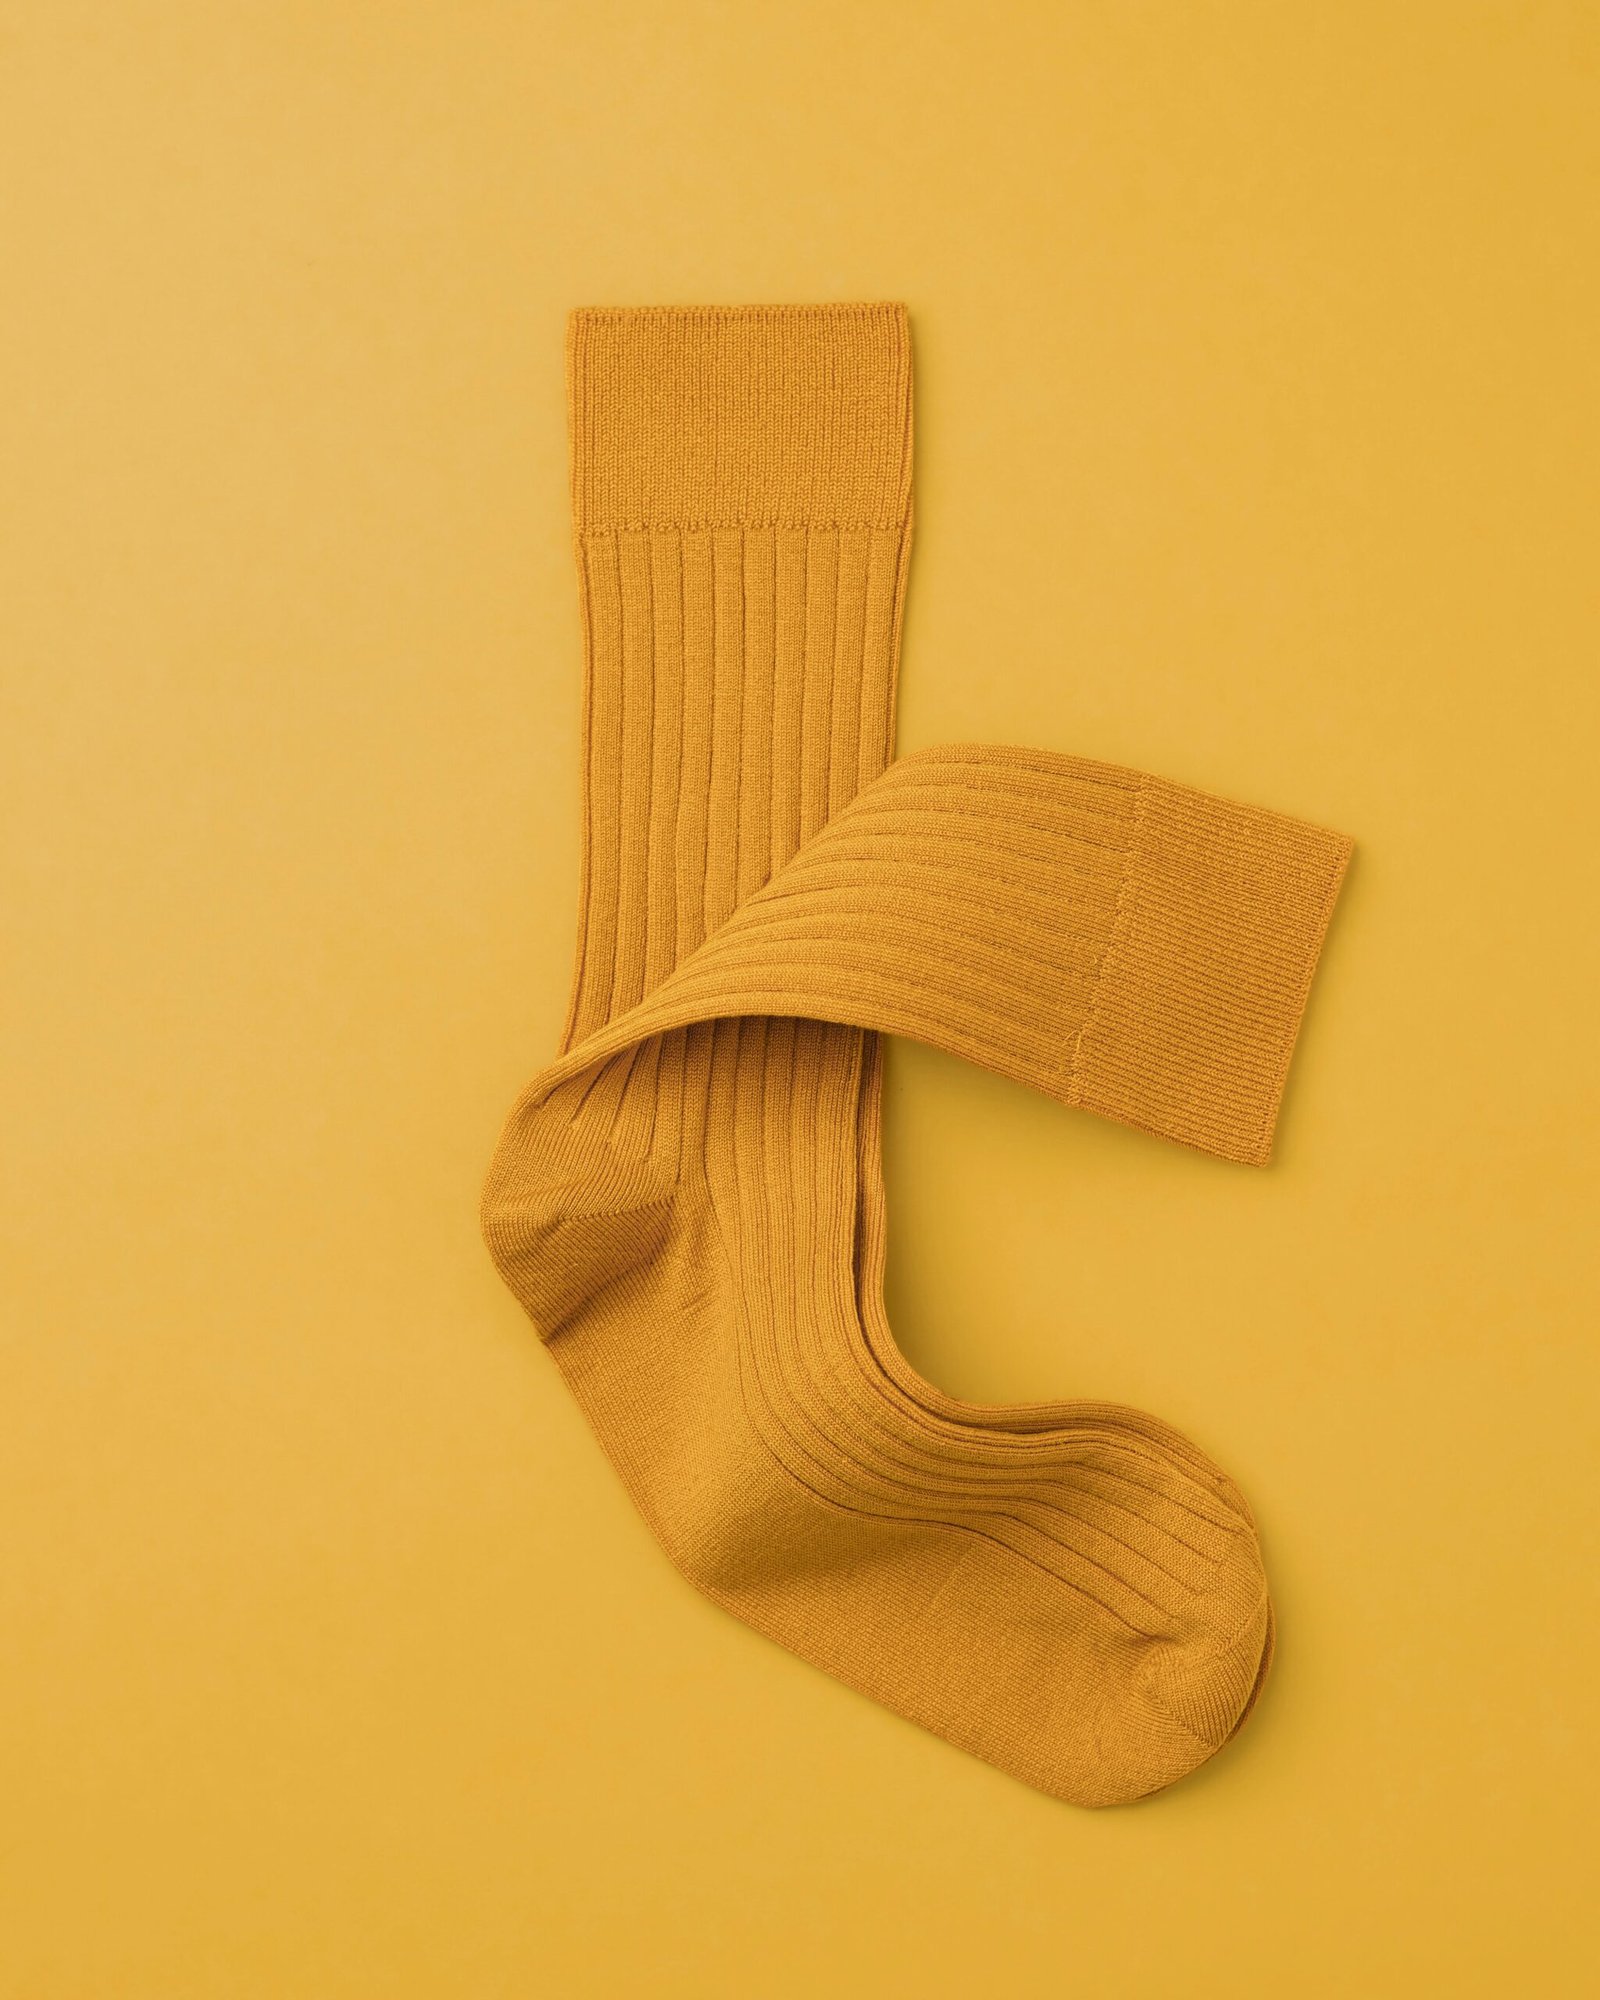 A Comprehensive Look at Selecting Socks for Various Footwear